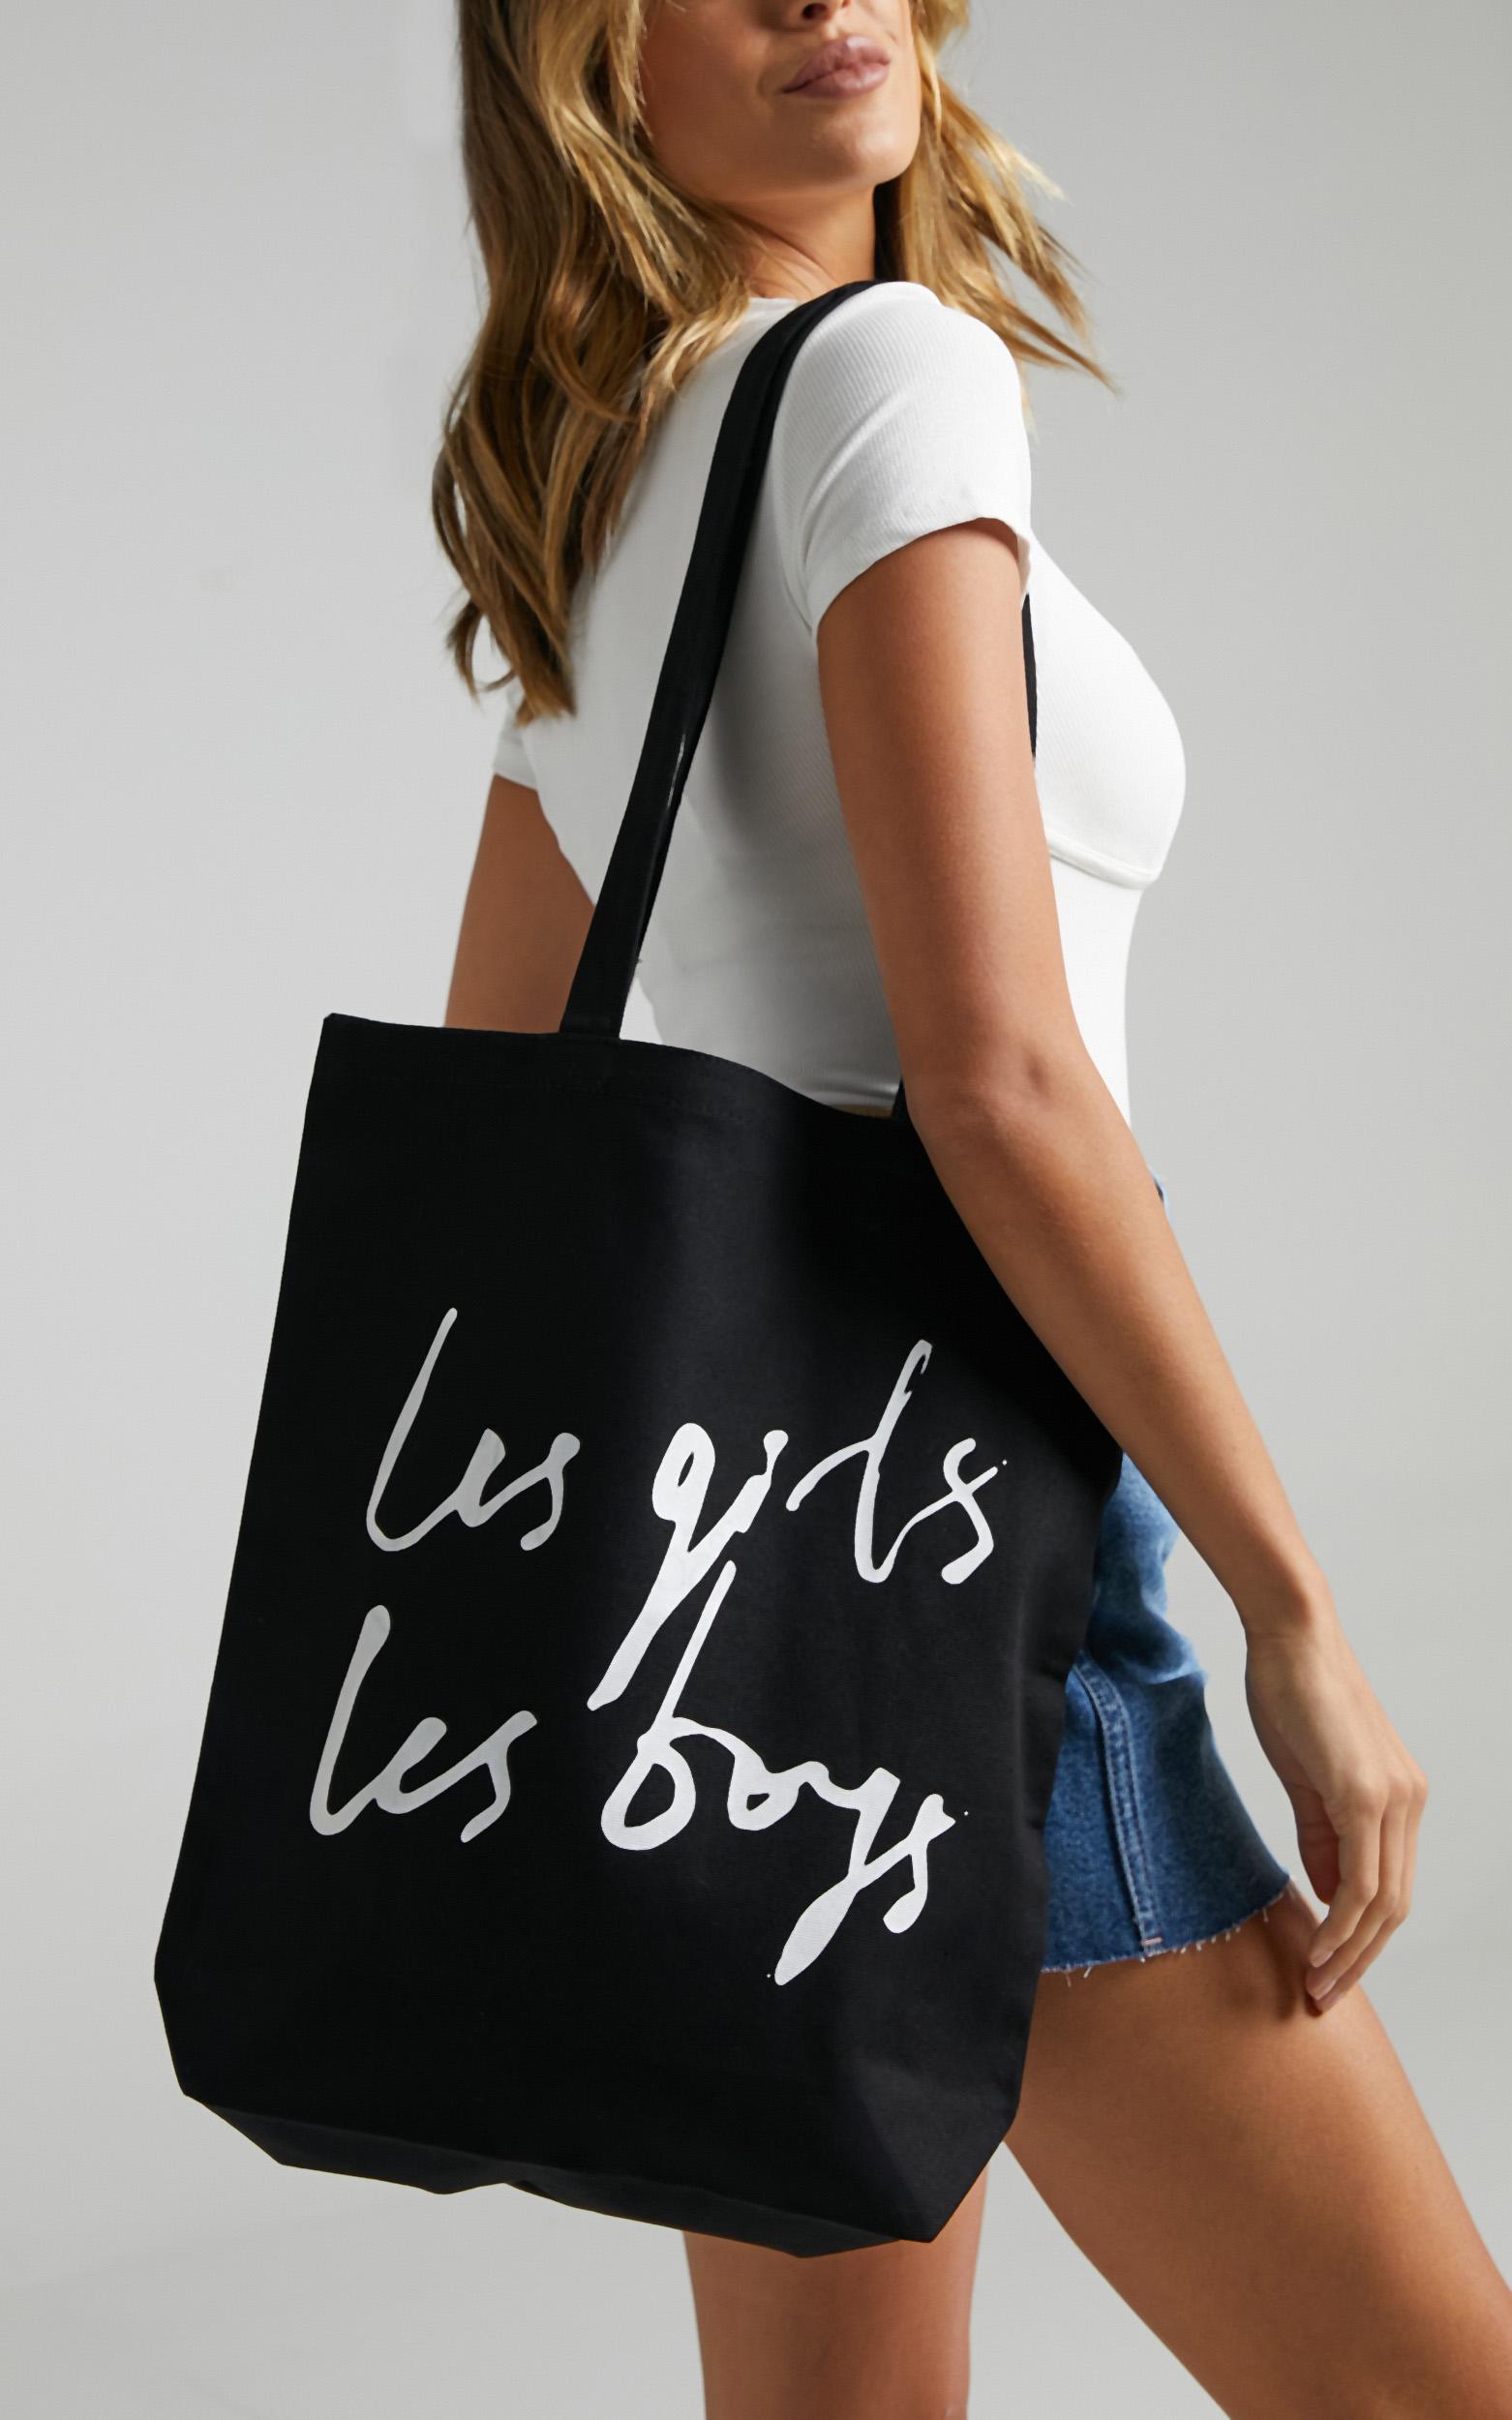 Les Girls Les Boys - Kindi Shopper in Black, , hi-res image number null